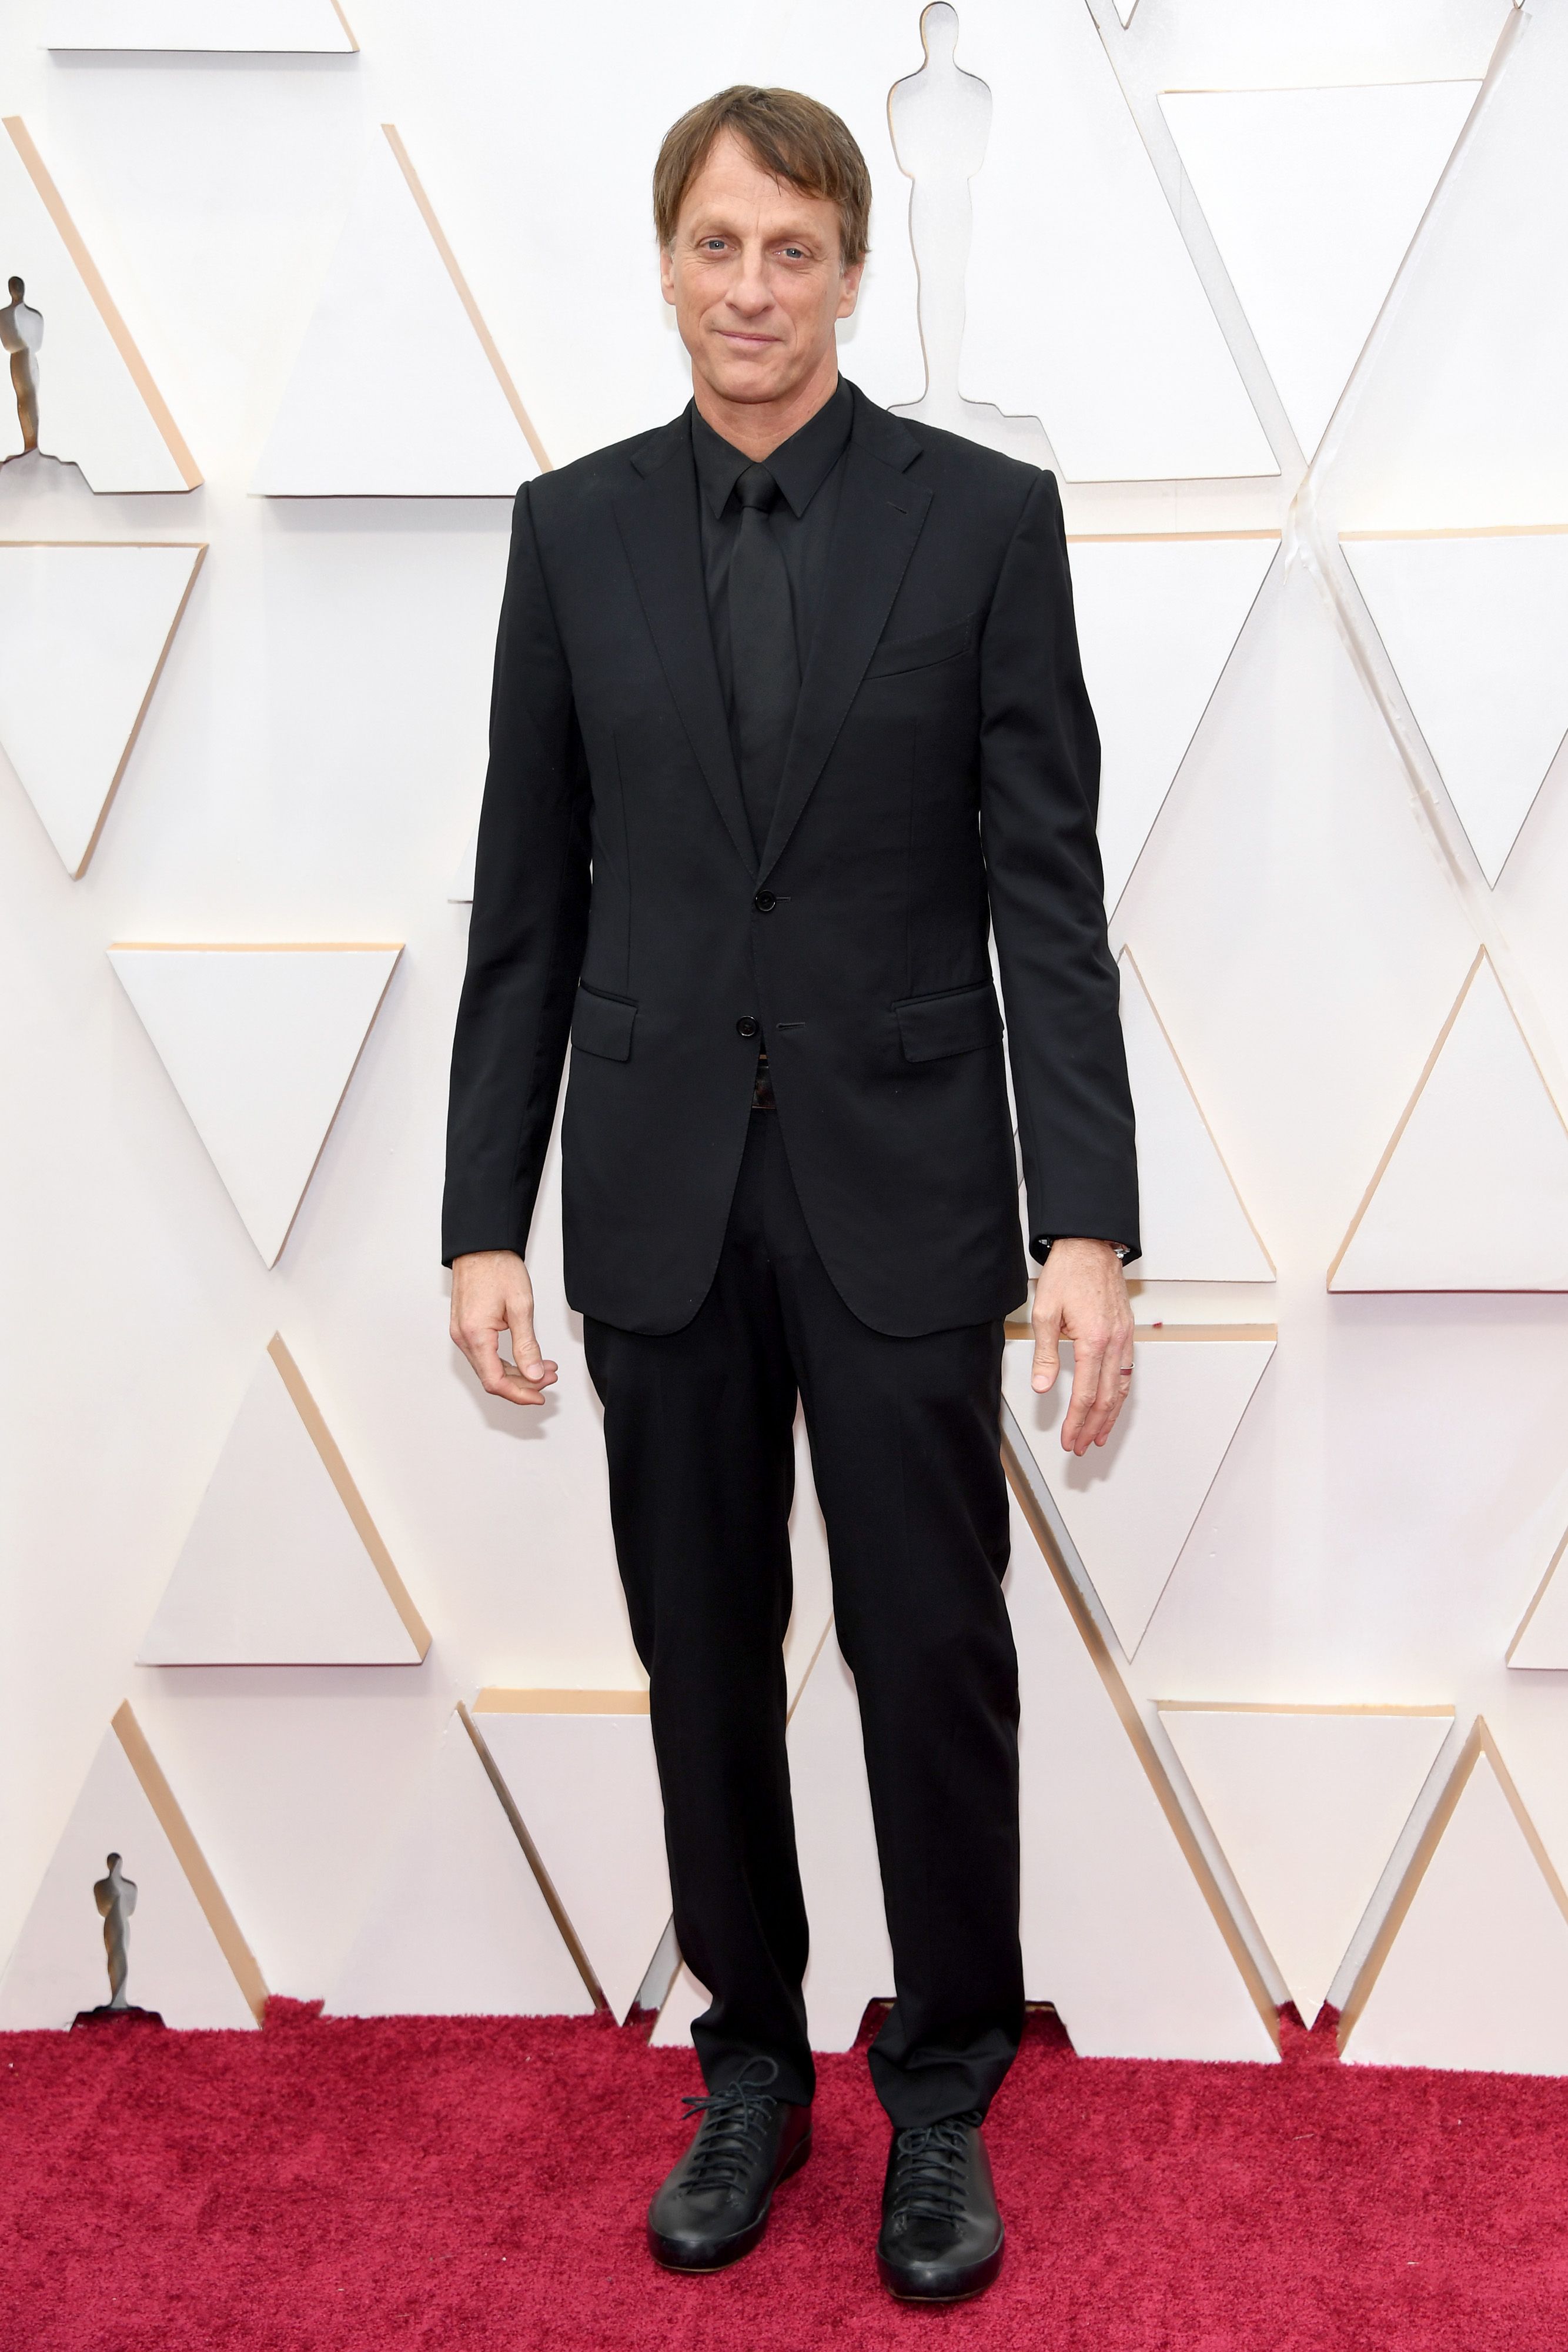 Tony Hawk on the Oscars, Fatherhood and Taking Risks - WSJ